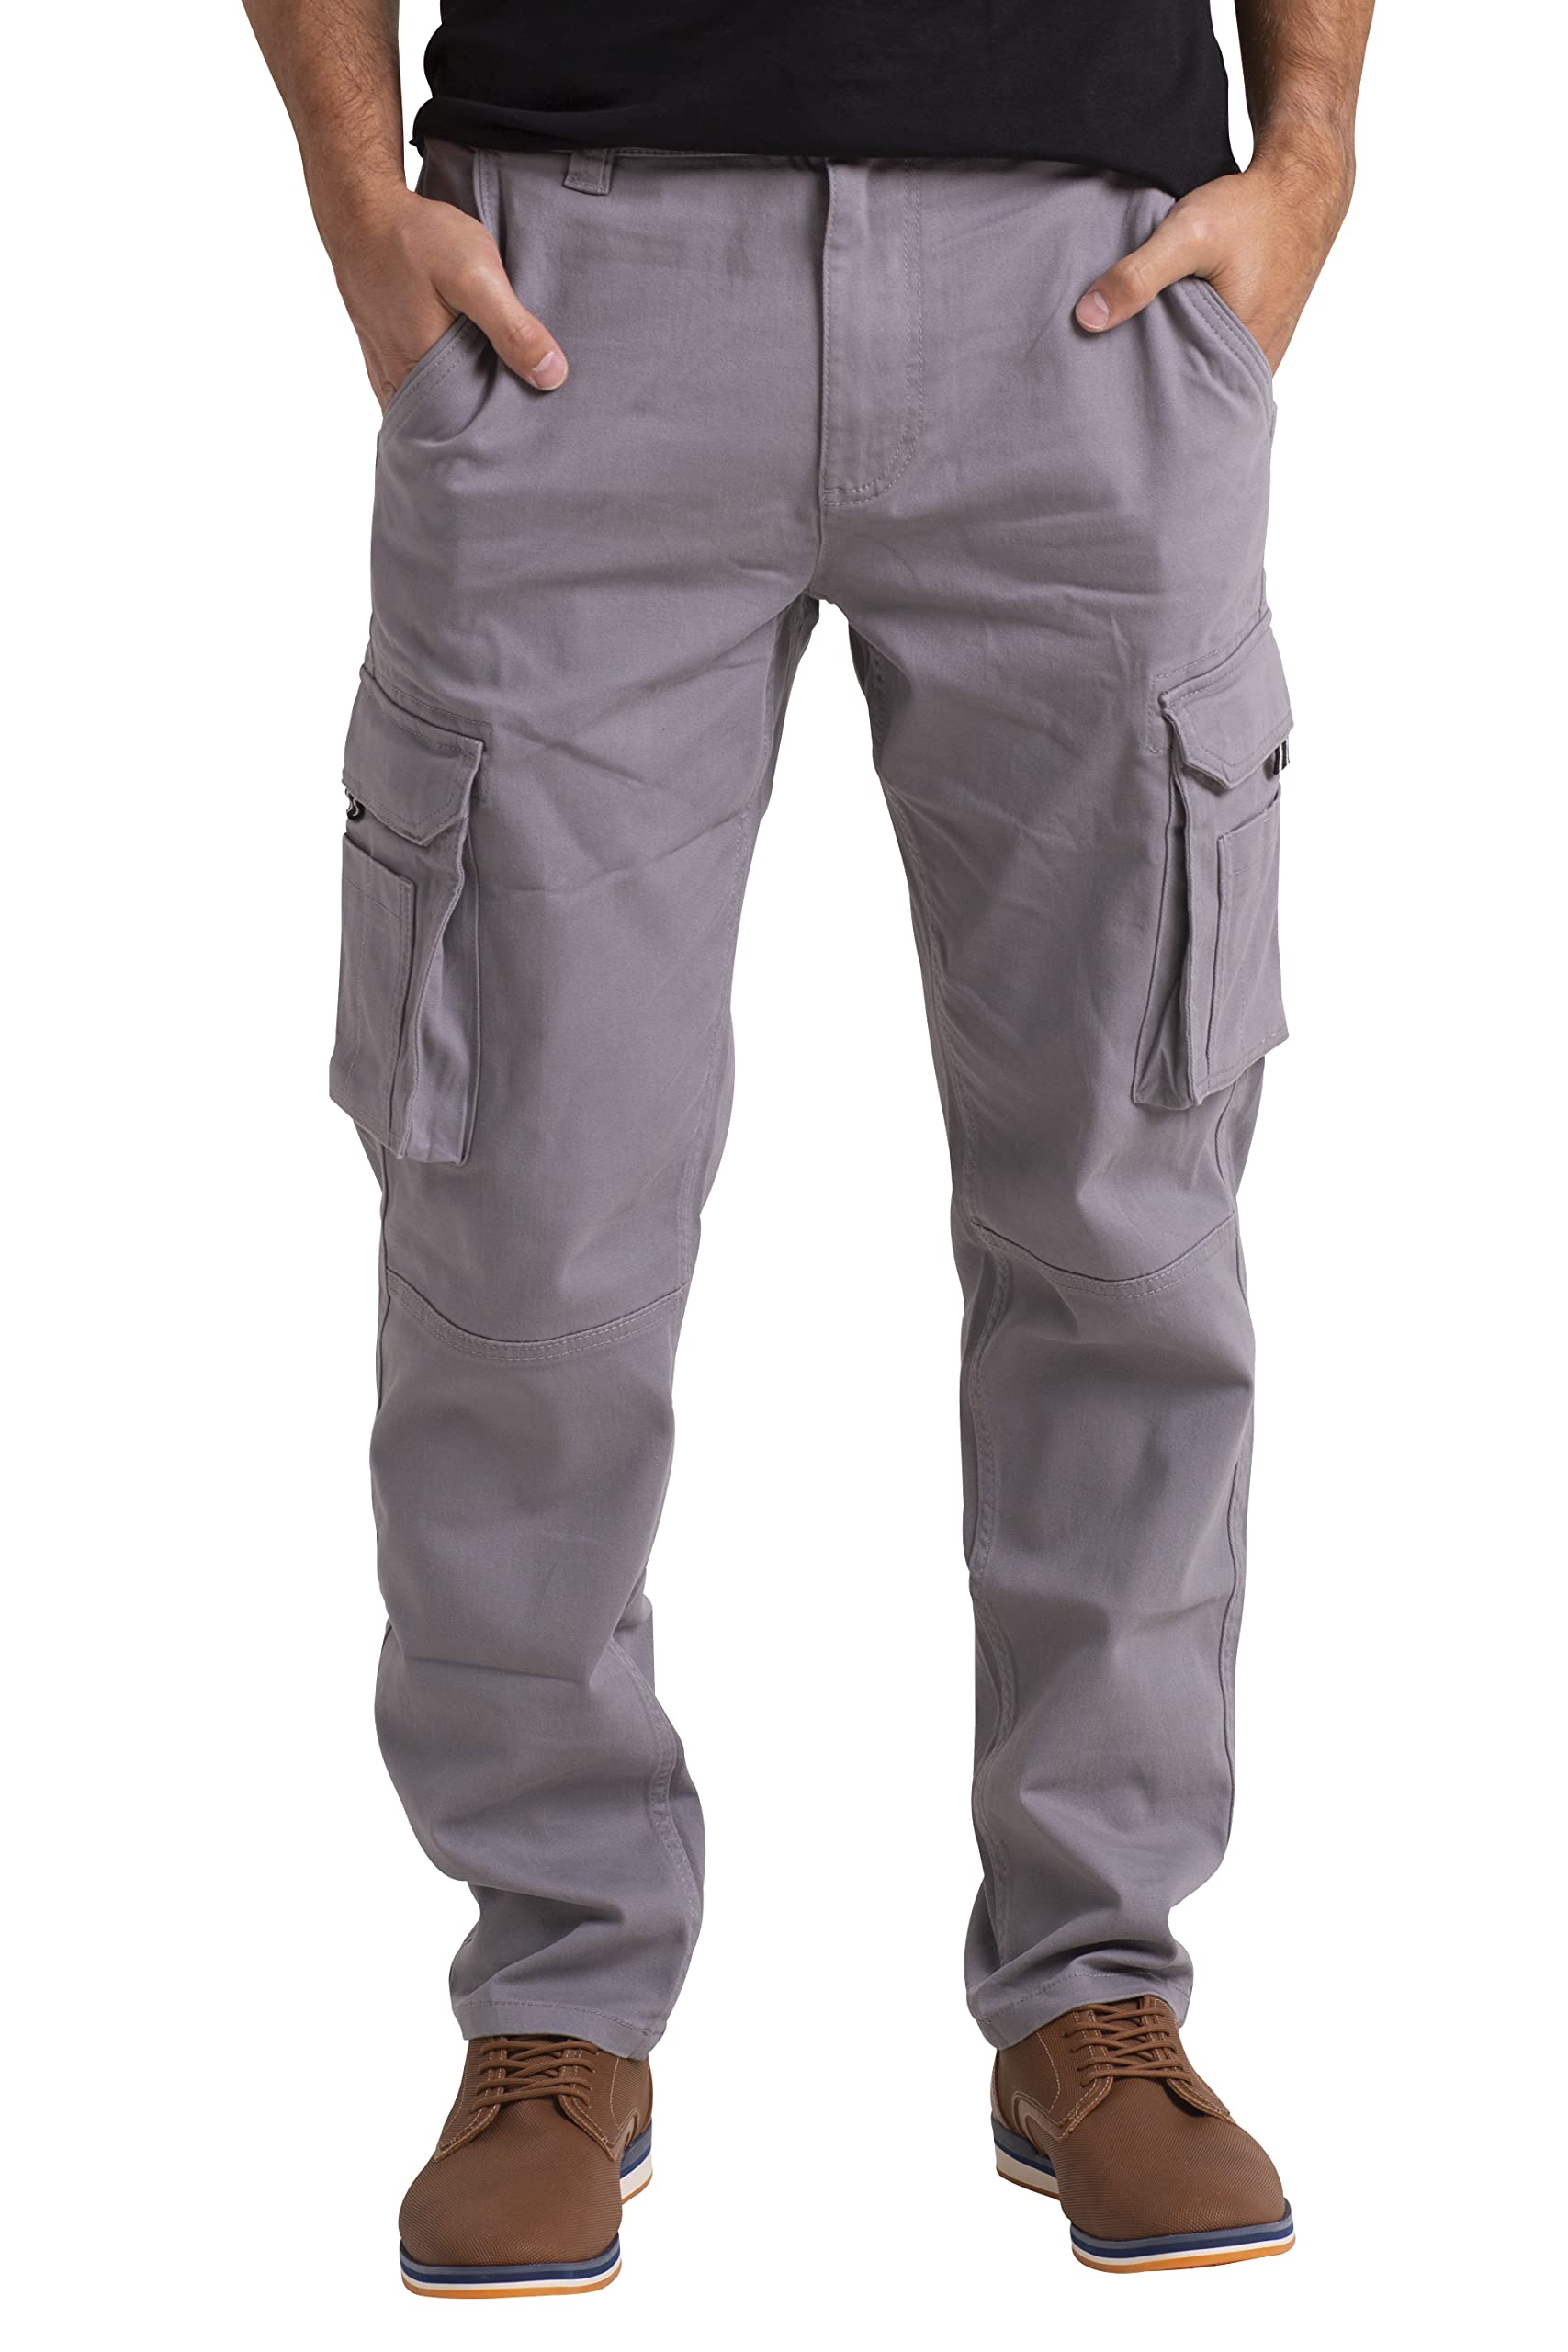 Gilles Cantuel Alamo Regular Fit Flex cargo Pants for Men - Heavy Duty ...